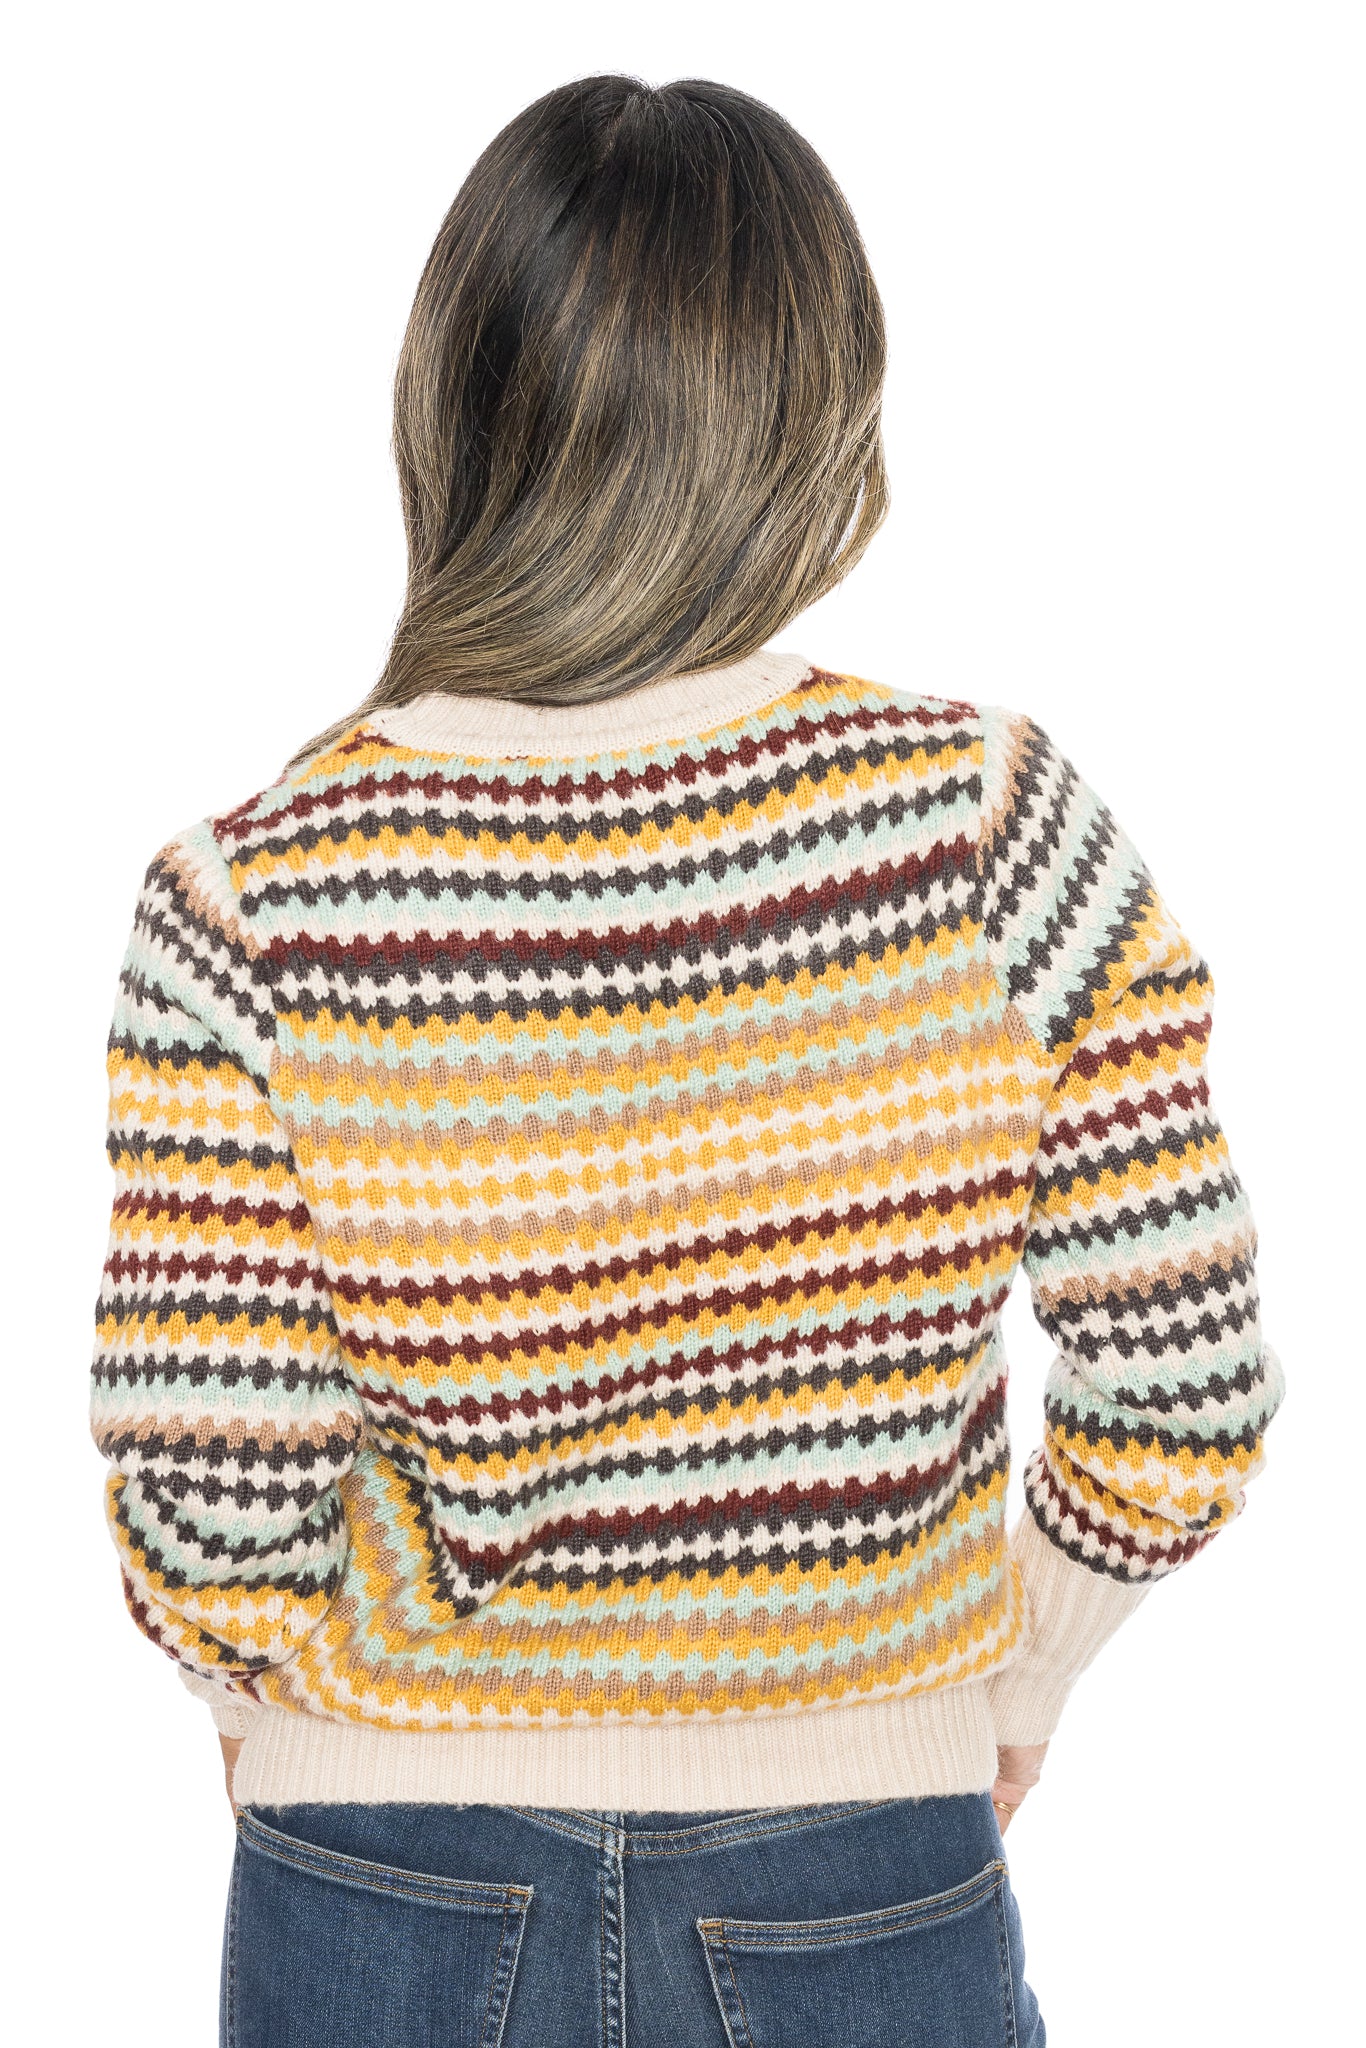 Orlando Sweater by Greylin